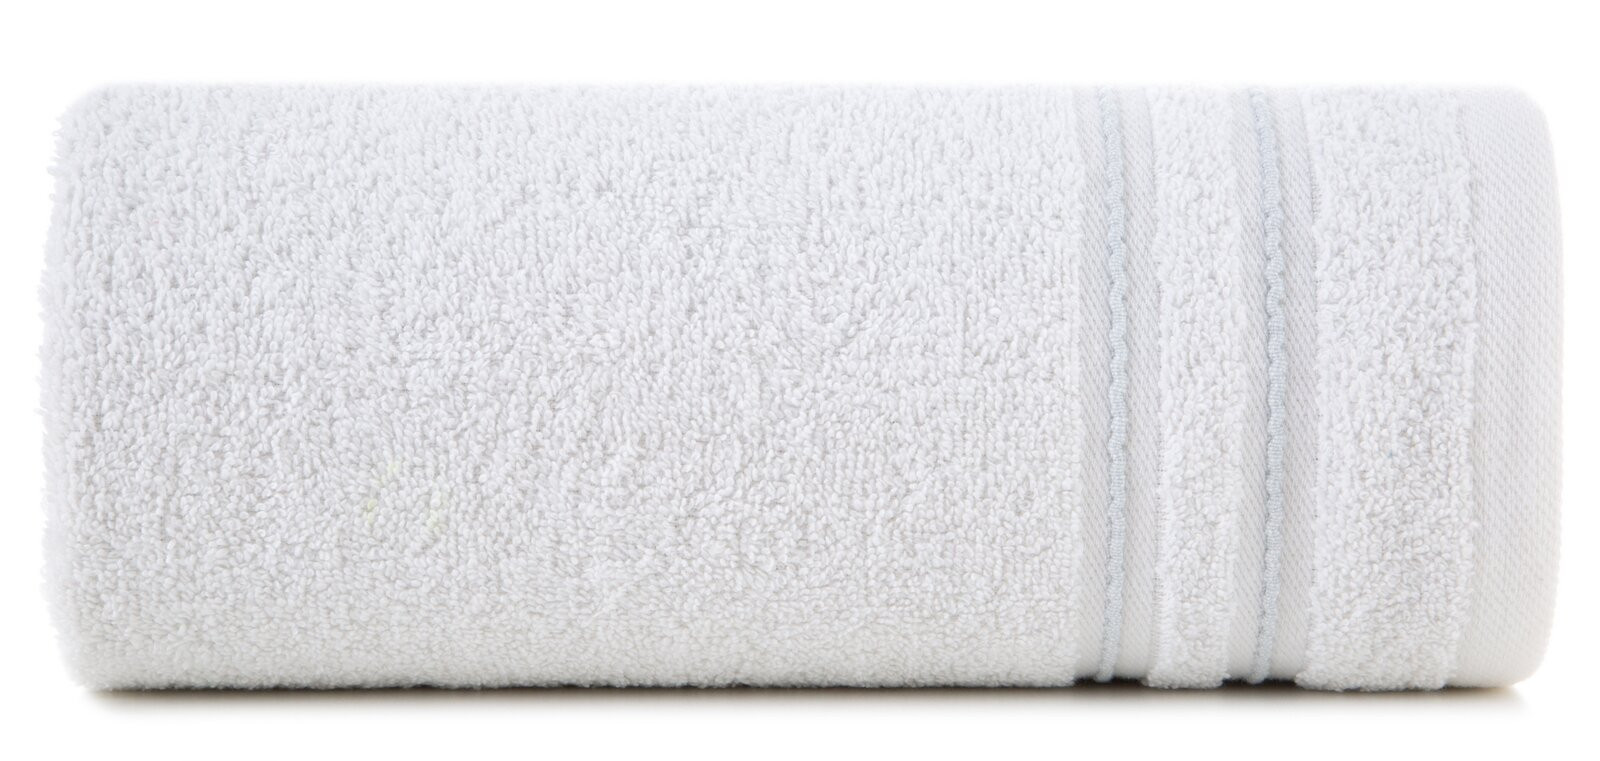 Sada ručníků EMINA 01 bílá